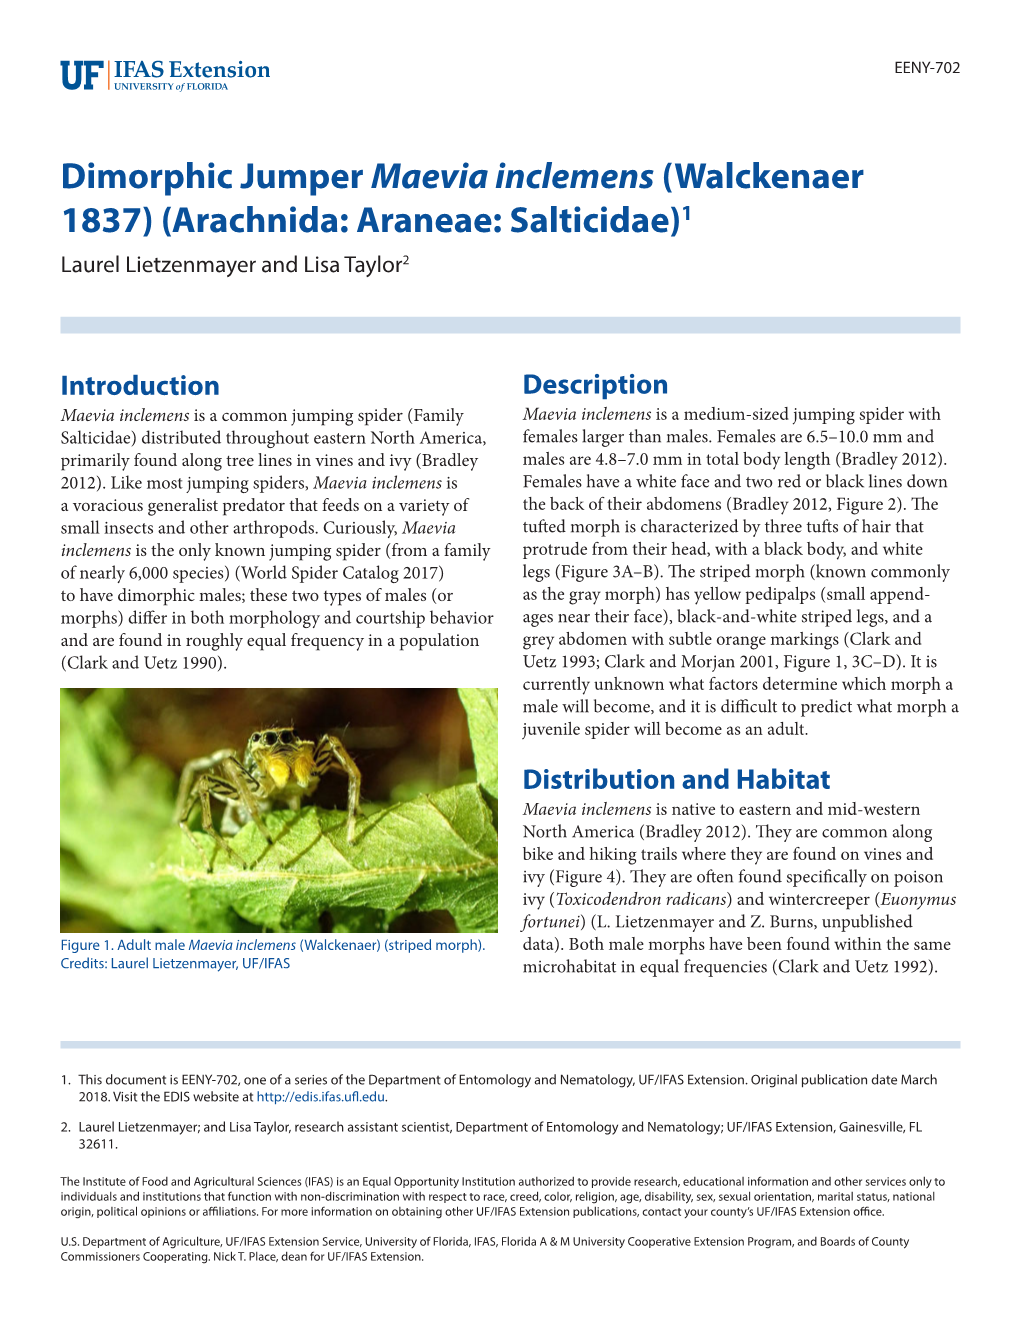 Dimorphic Jumper Maevia Inclemens (Walckenaer 1837) (Arachnida: Araneae: Salticidae)1 Laurel Lietzenmayer and Lisa Taylor2